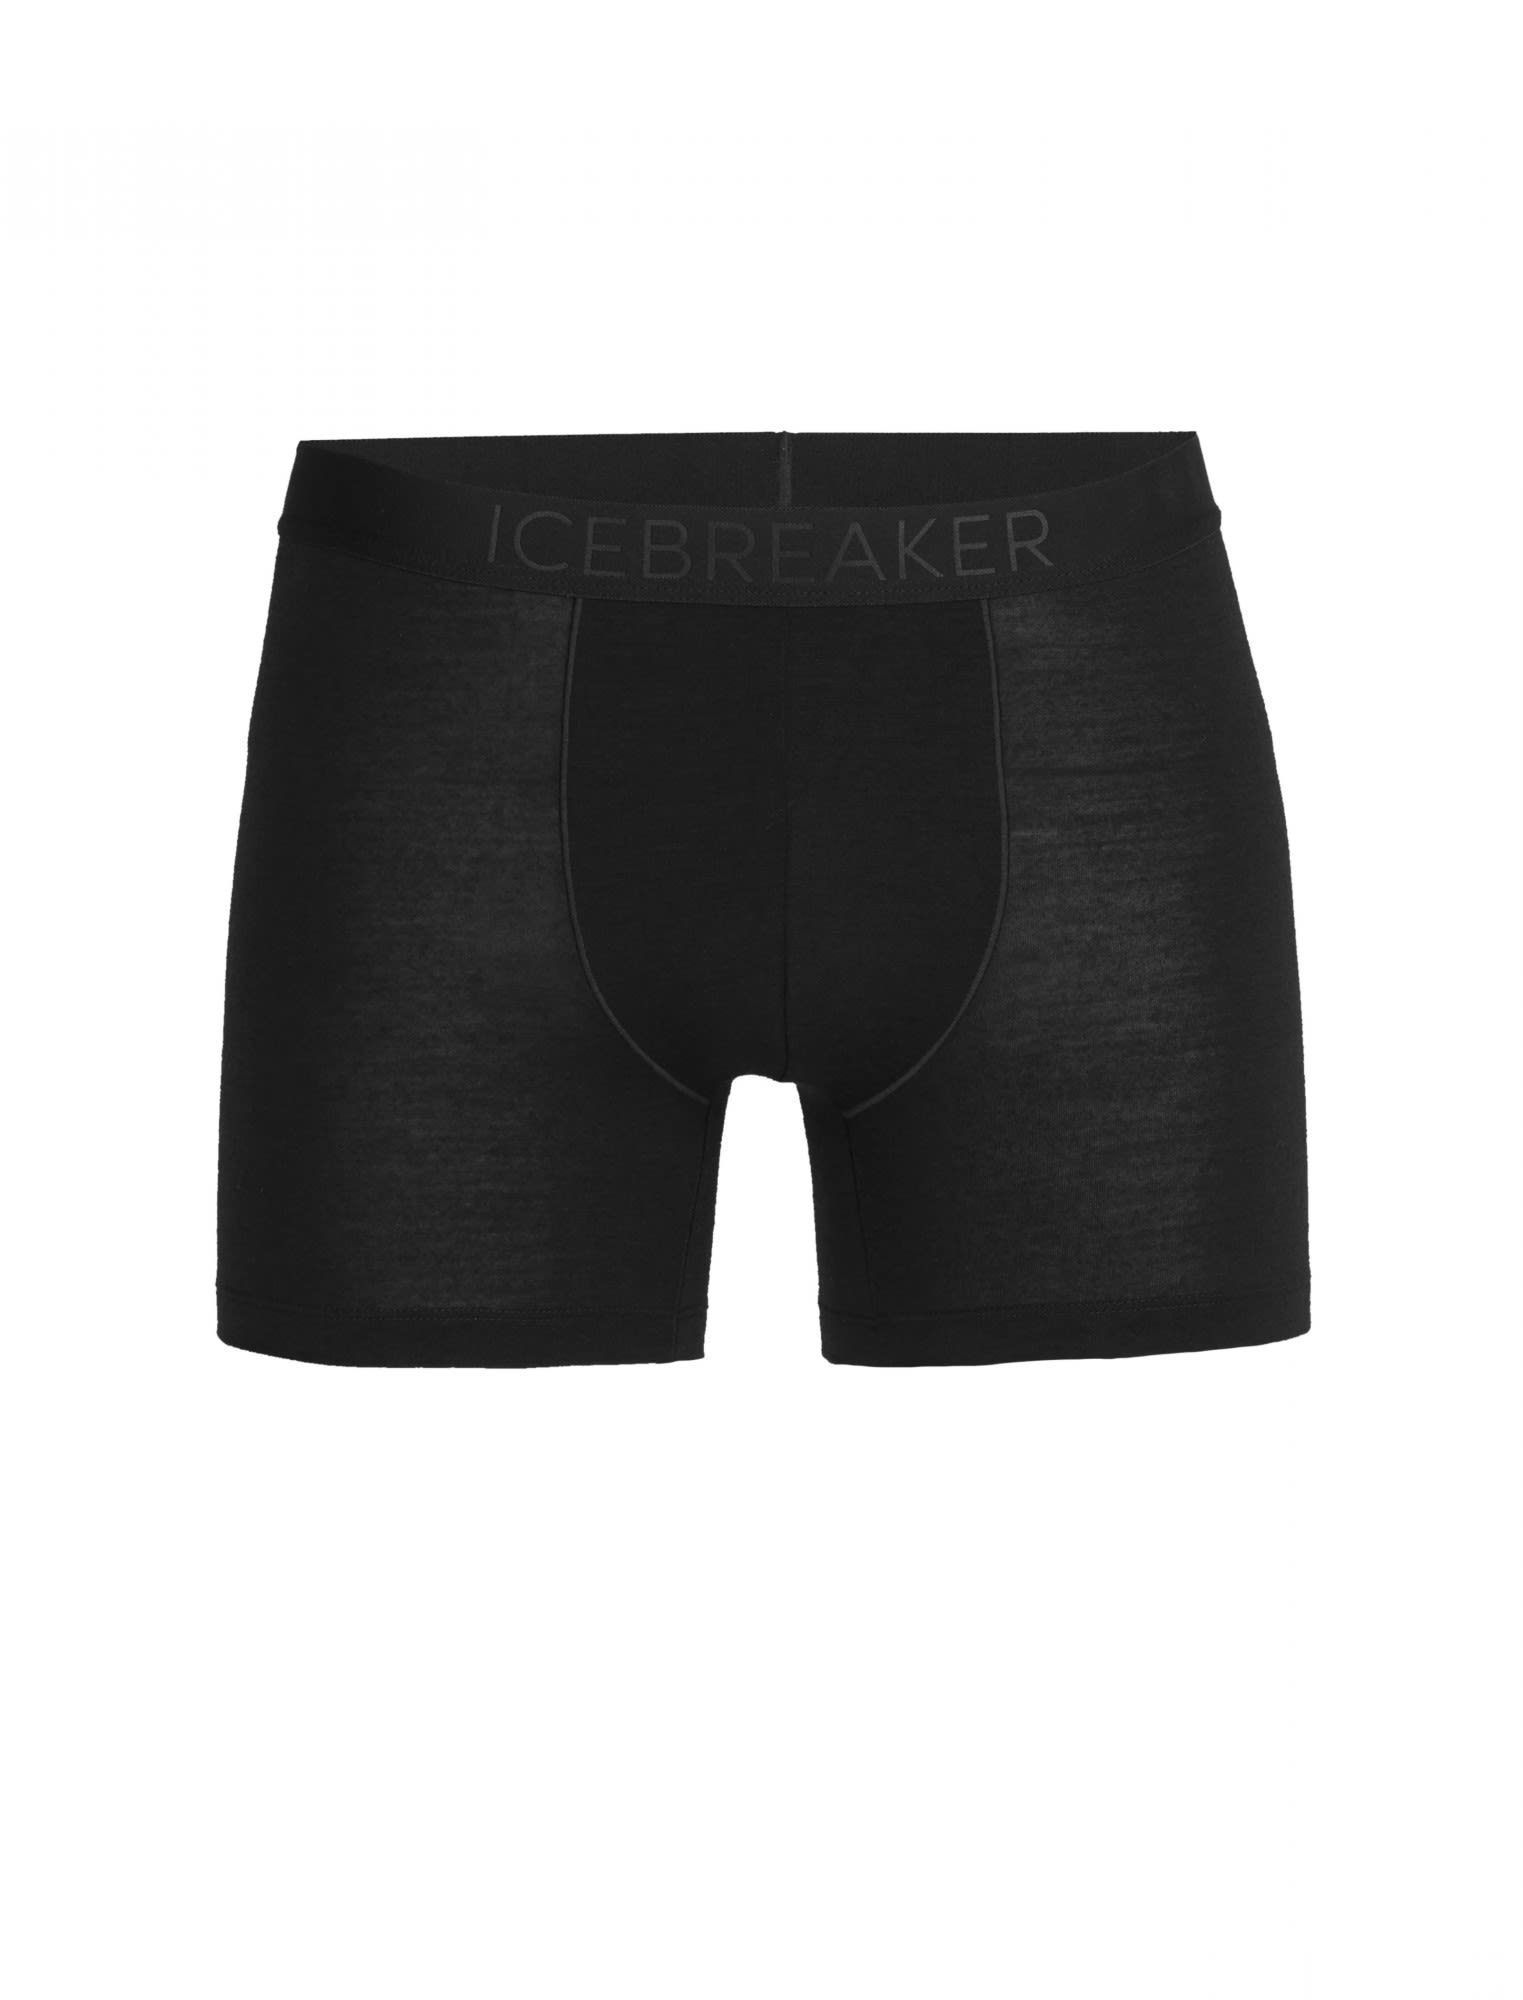 Cool-lite M Icebreaker Boxers Icebreaker Black Lange Unterhose Herren Anatomica